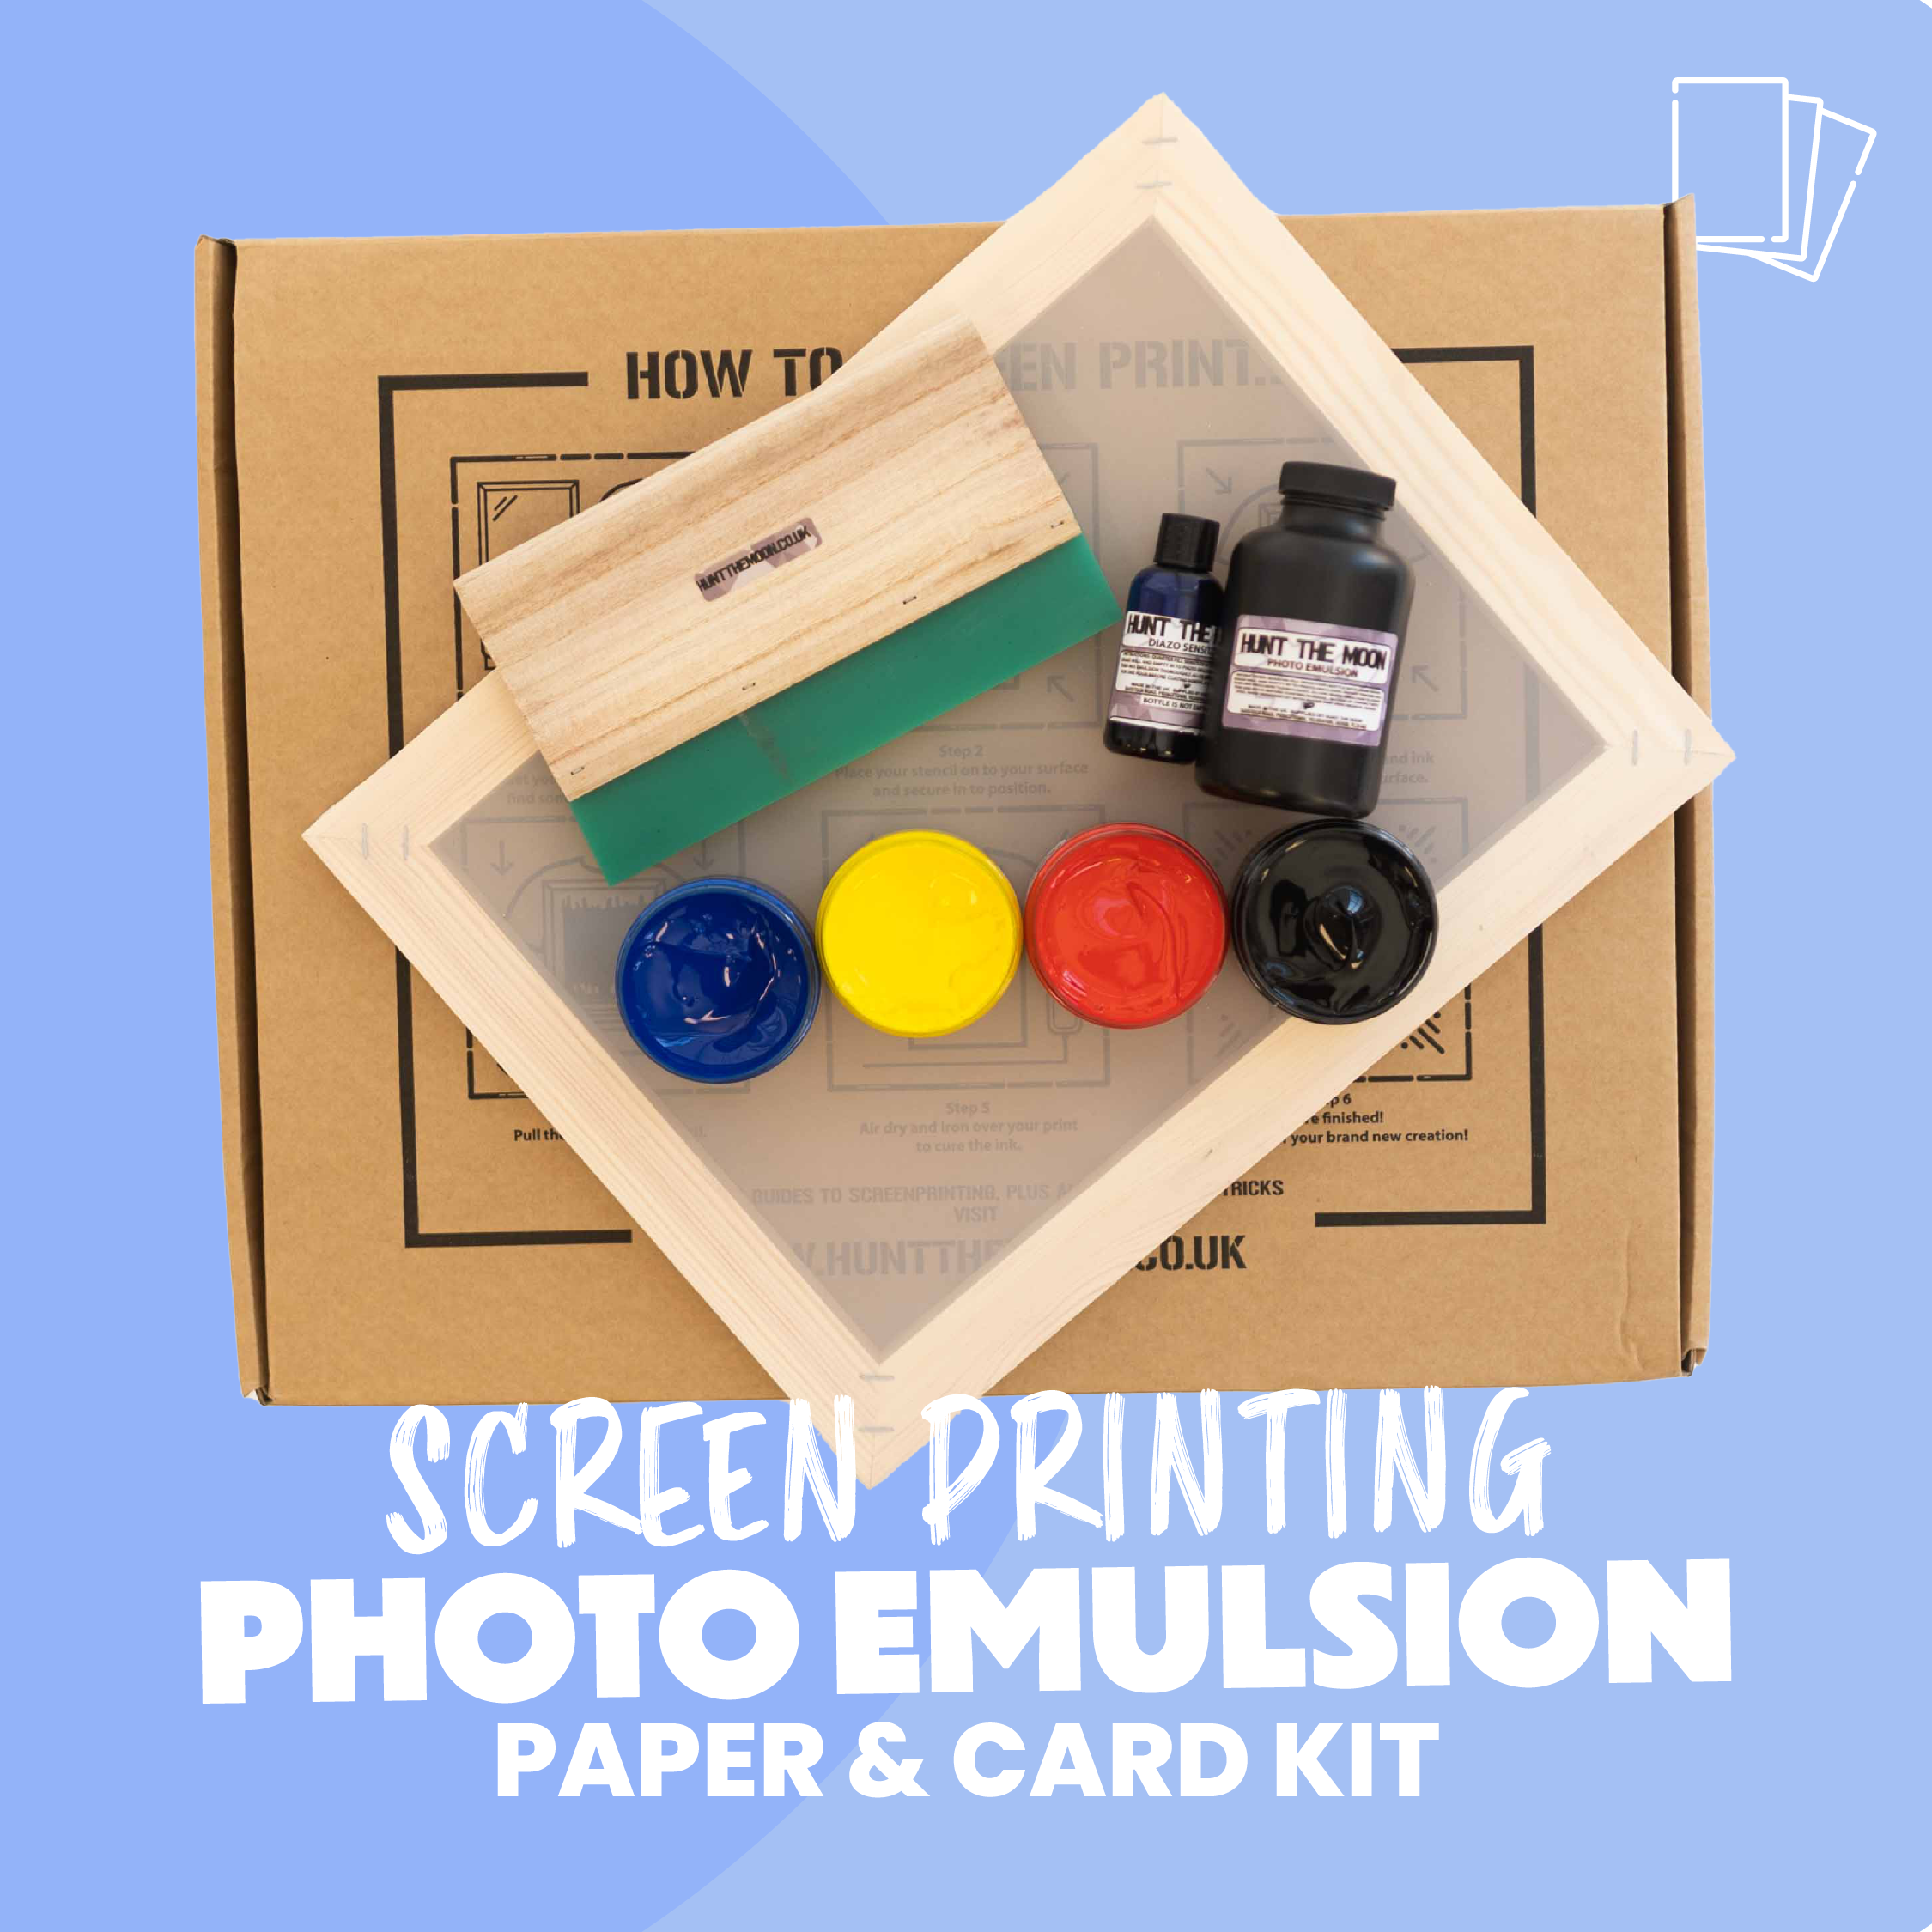 Shop Photo Paper, Photo Printing Paper